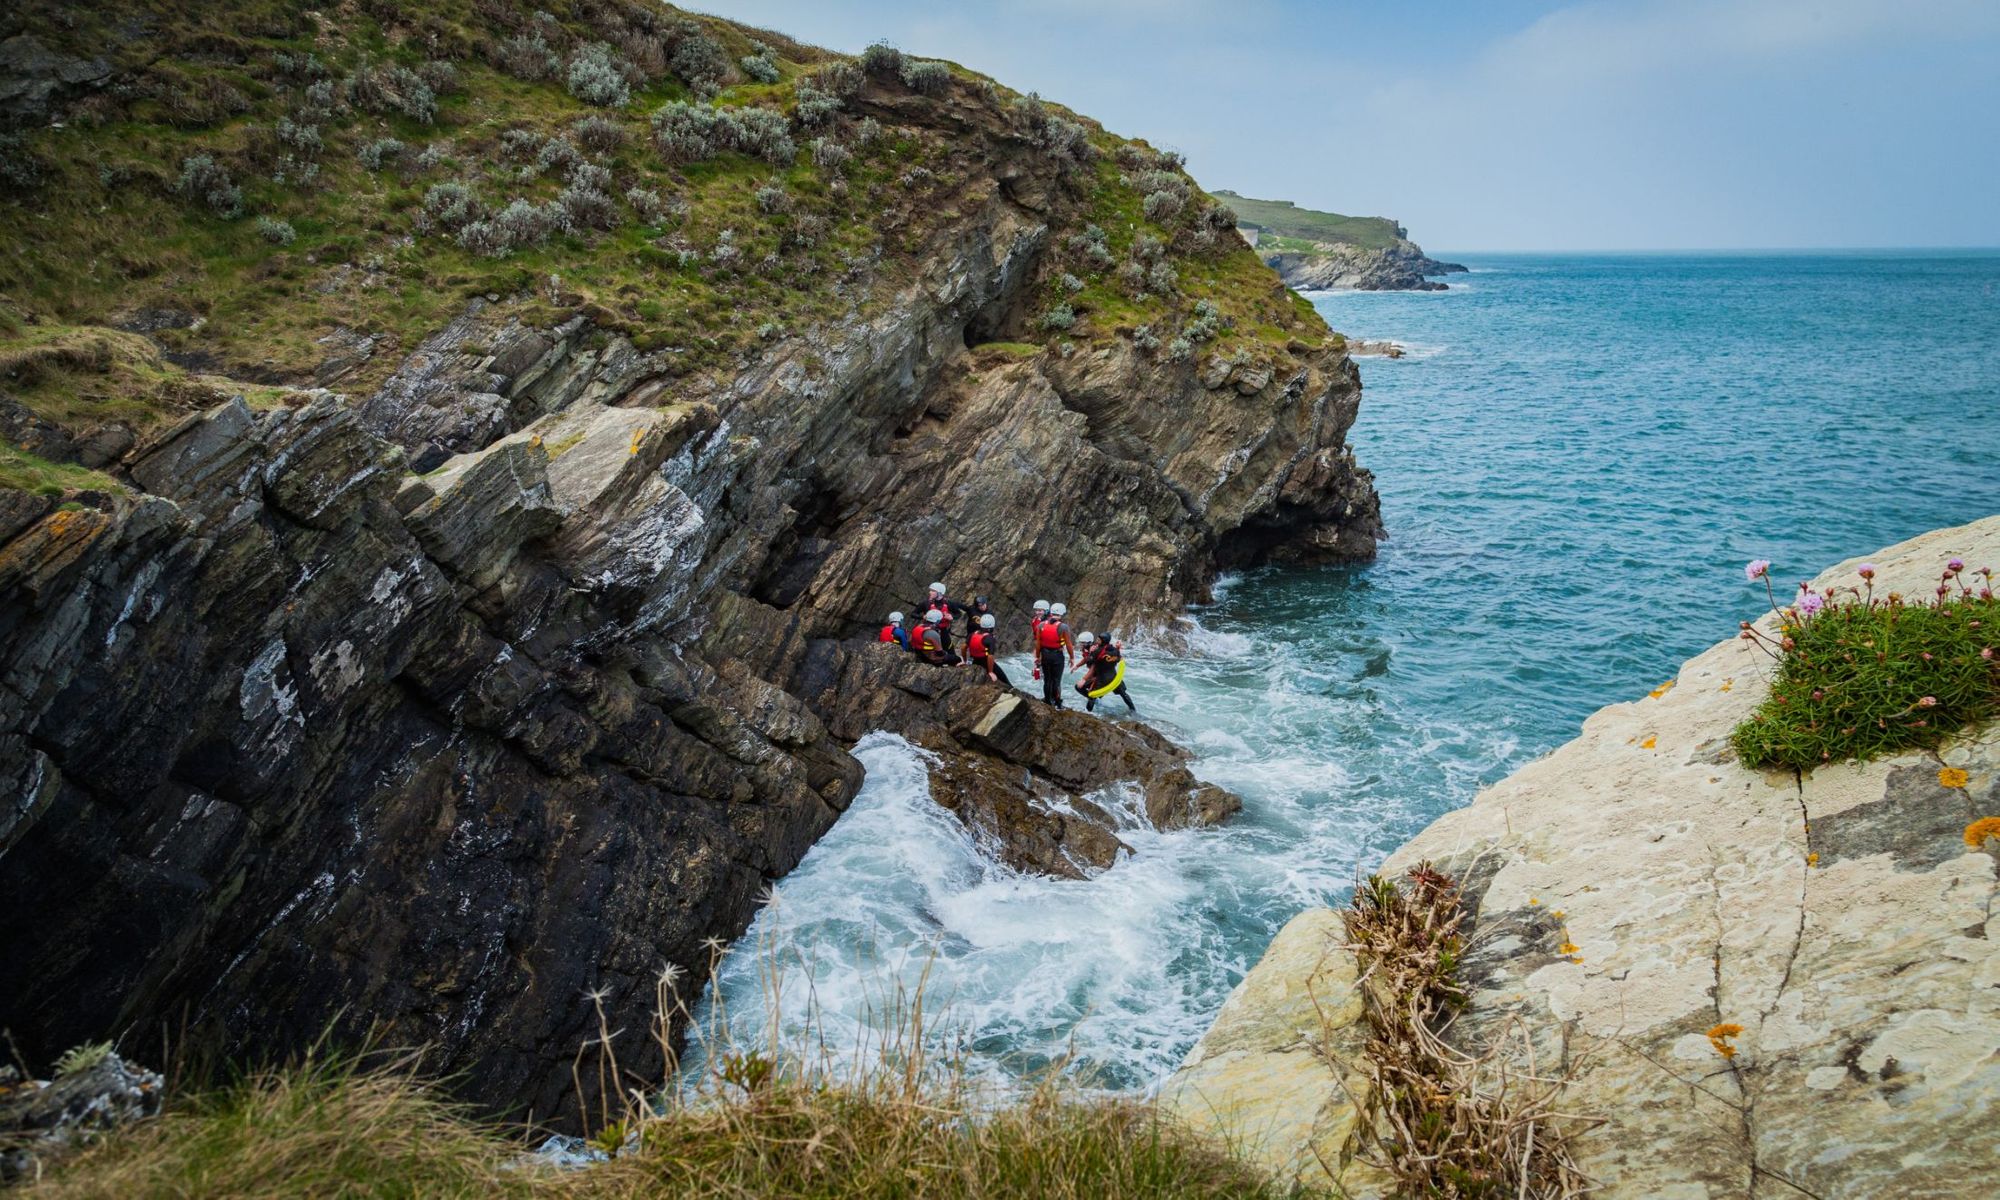 A group of people coasteering around the North Cornish coast, near Newquay.